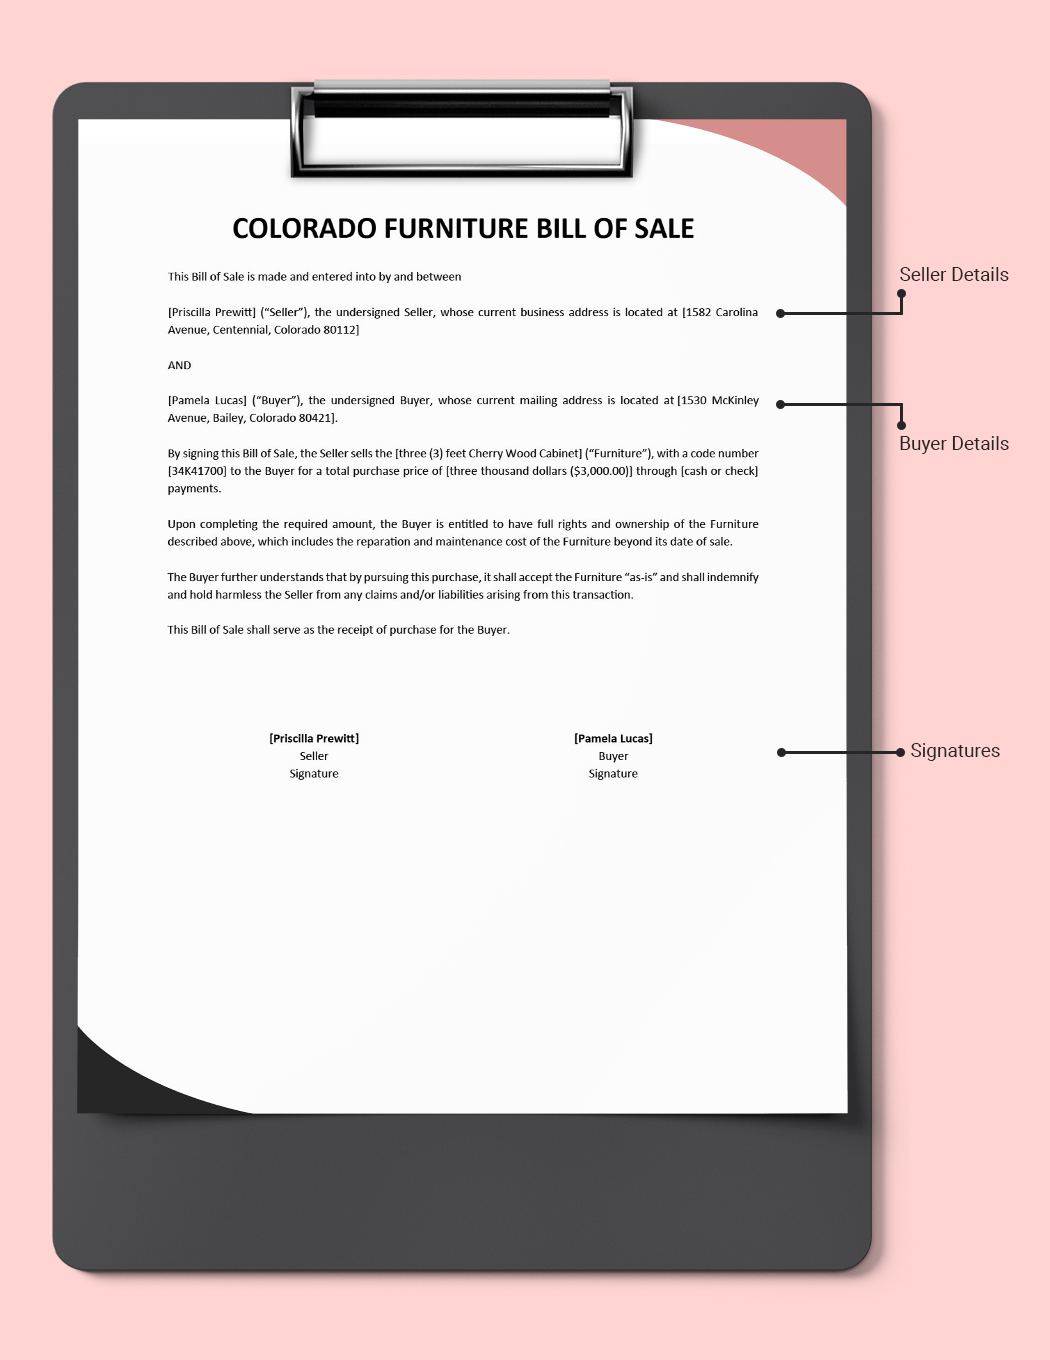 Colorado Furniture Bill of Sale Template